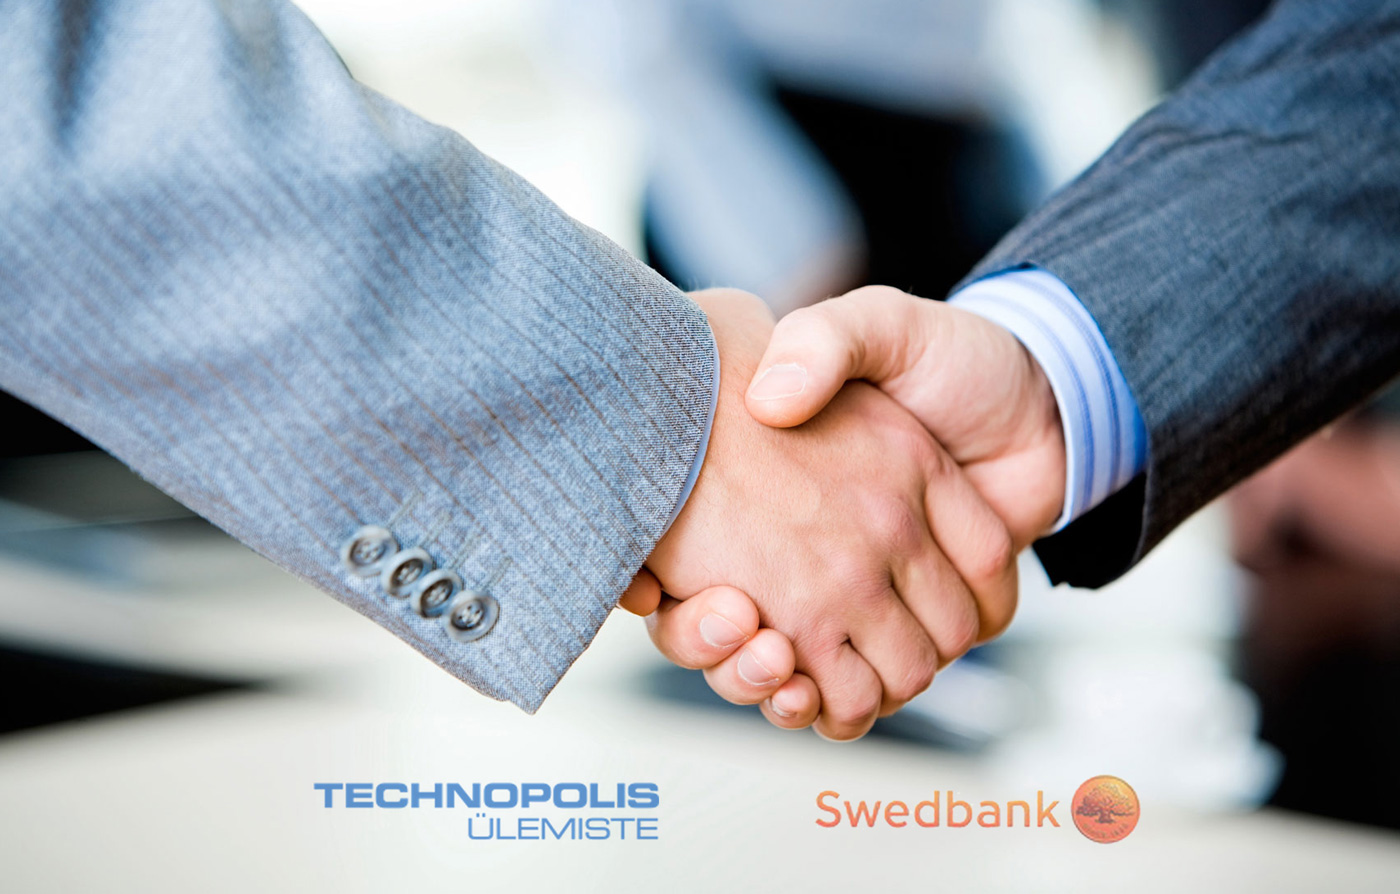 Technopolis Ülemiste и Swedbank: договор подписан!